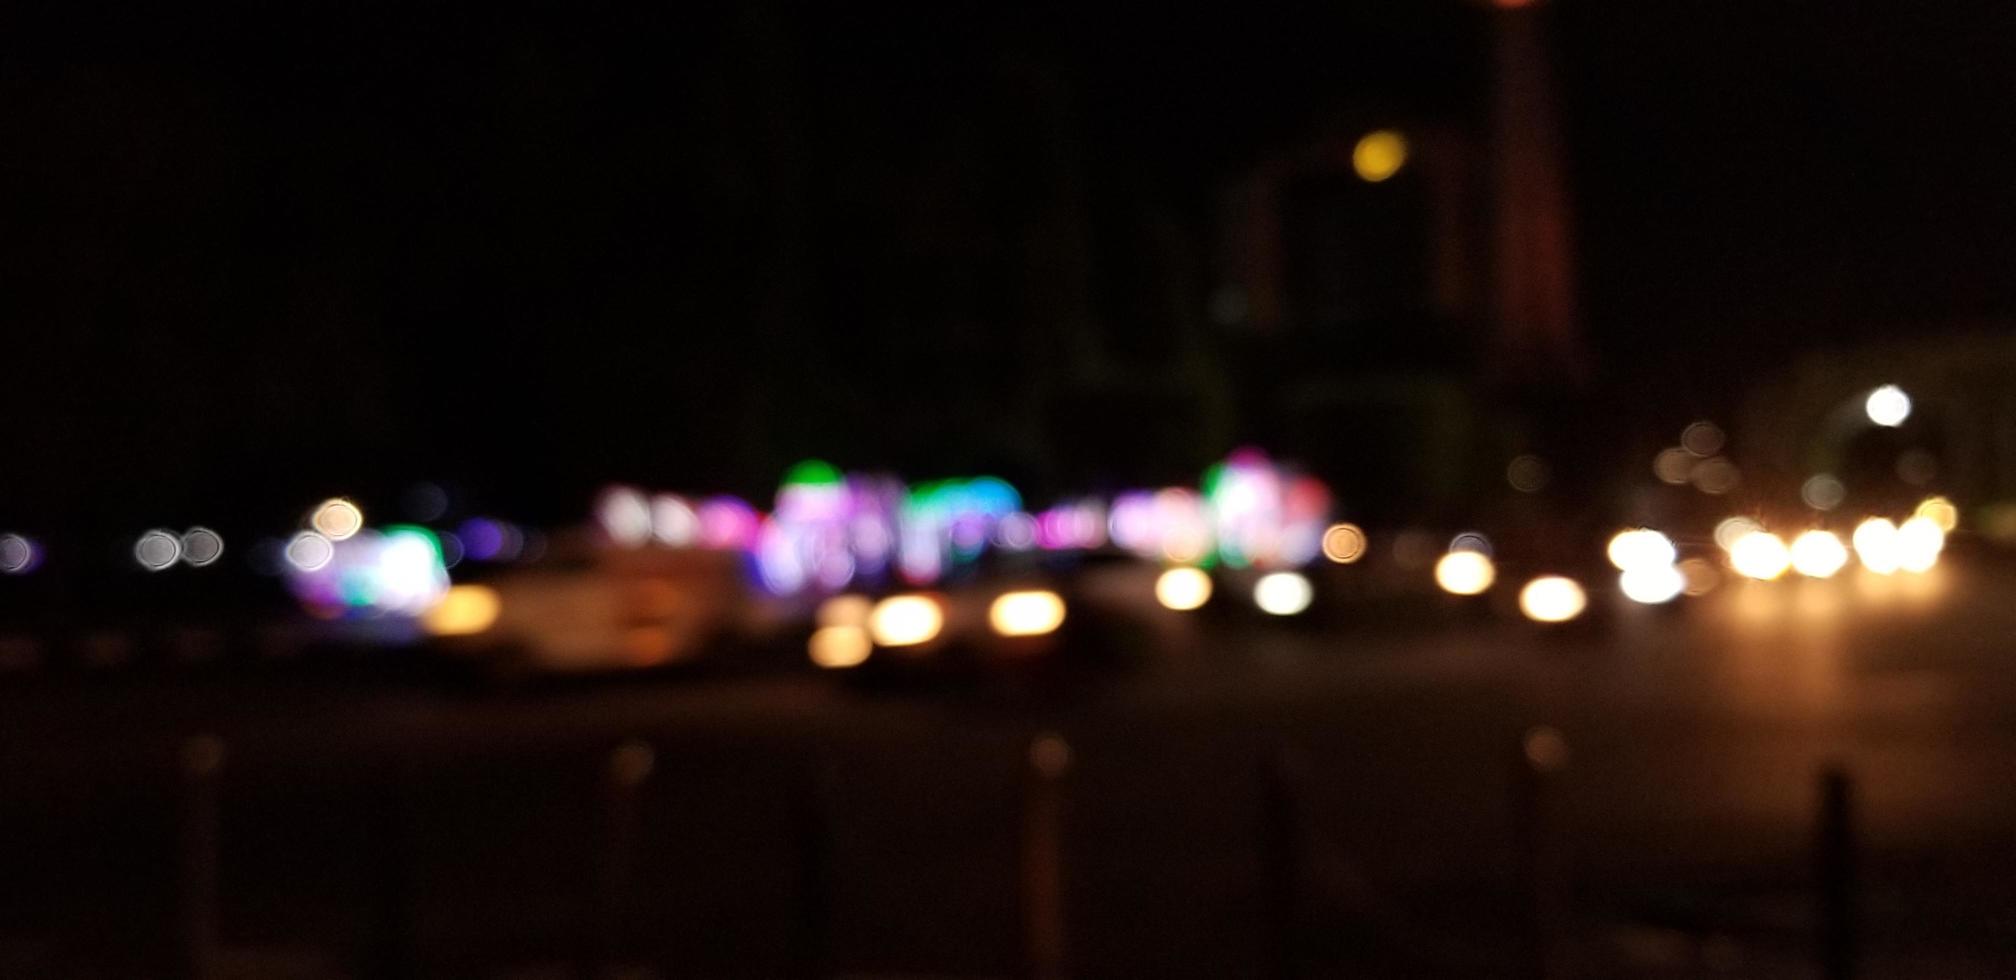 blurry bokeh light at night photo